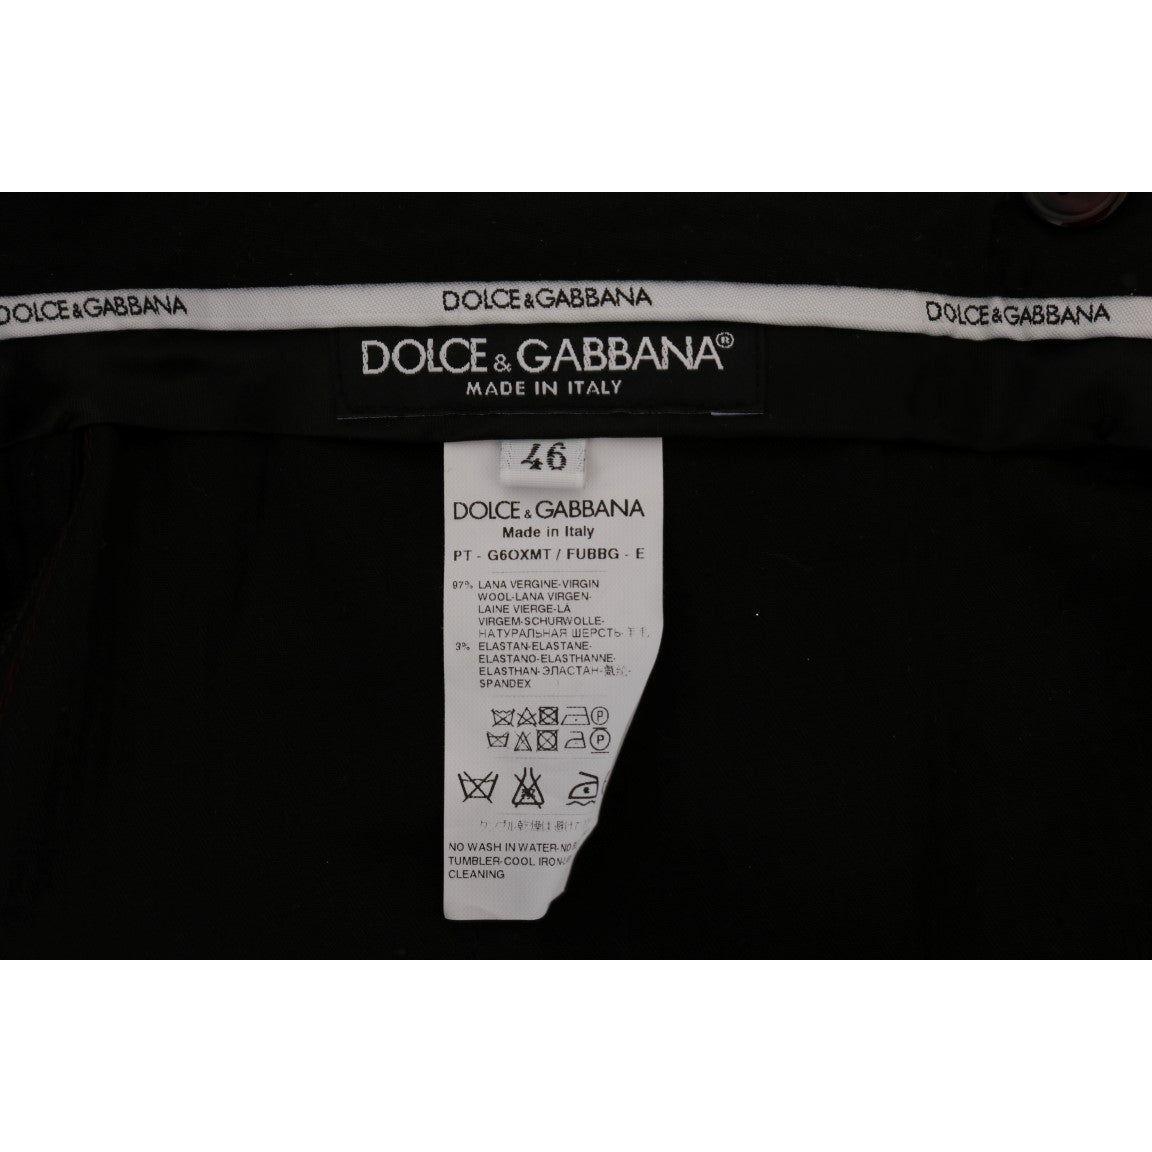 Dolce & Gabbana Elegant Slim Fit Formal Trousers in Purple purple-wool-stretch-formal-pants 447738-purple-wool-stretch-formal-pants-5.jpg